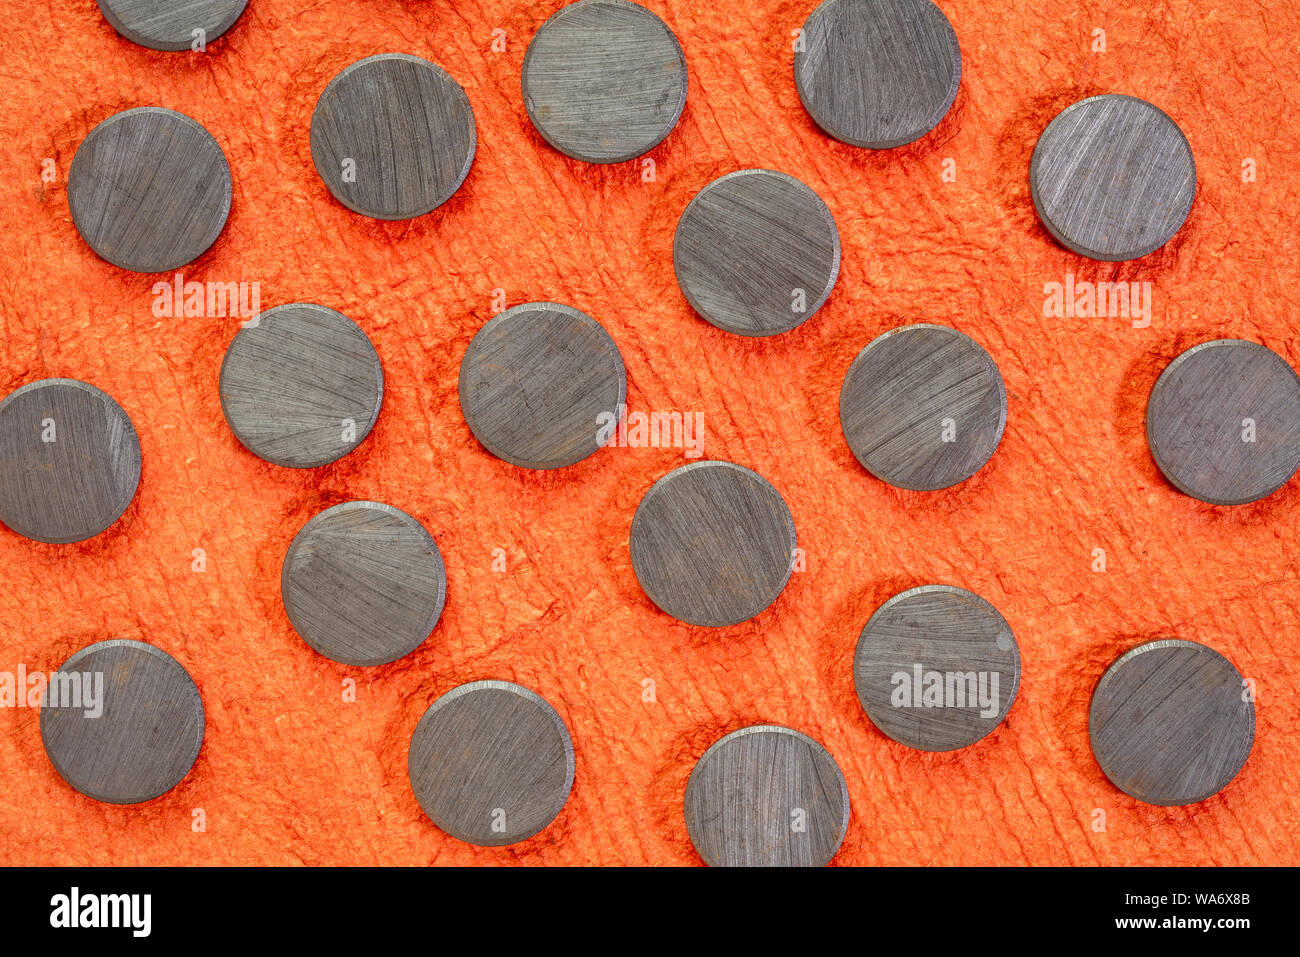 set of small round ceramic ferrite magnets - top view against textured orange bark paper Stock Photo